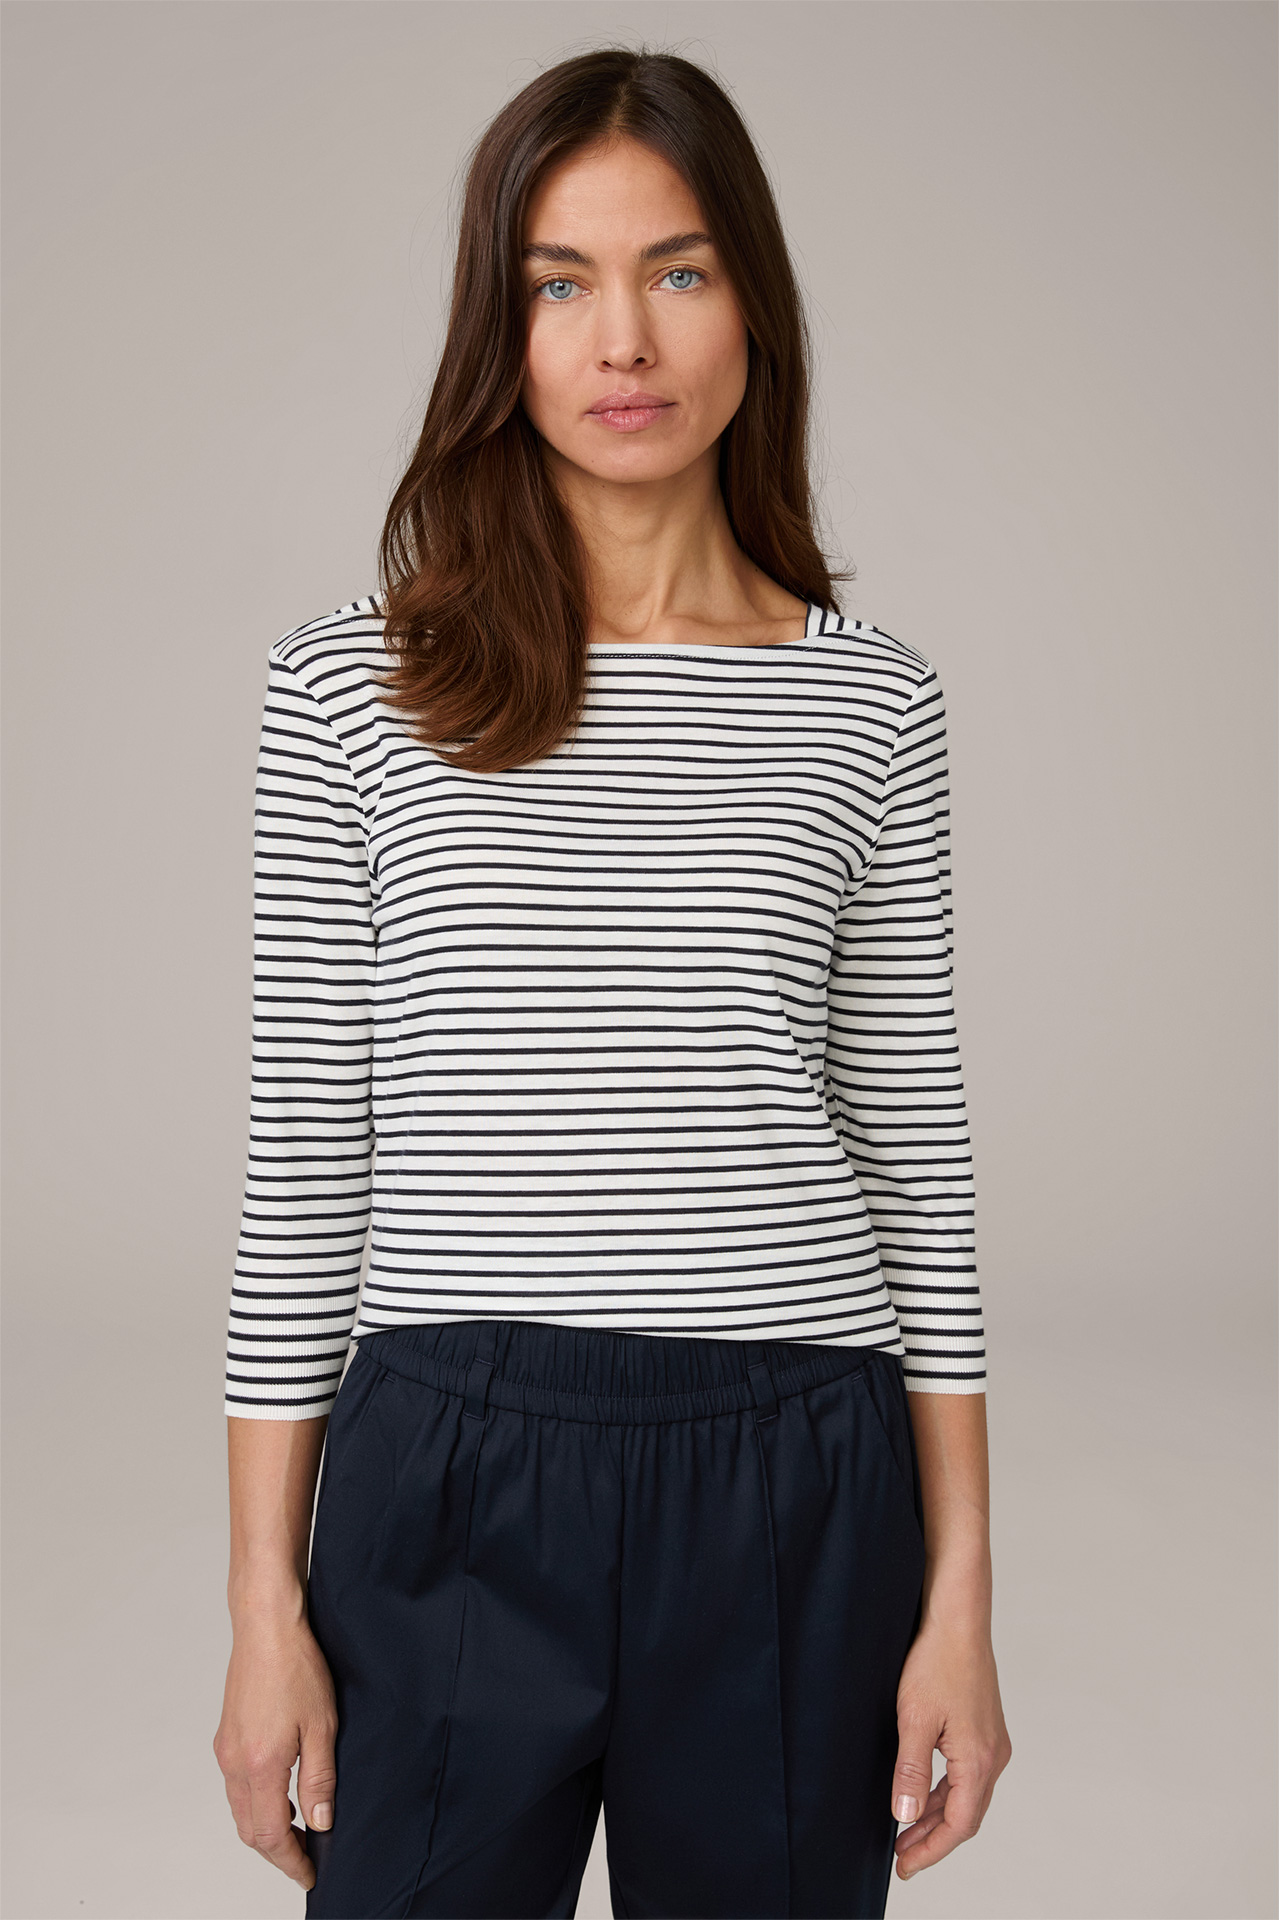 Tencel/Cotton Shirt in Navy and Ecru Stripes